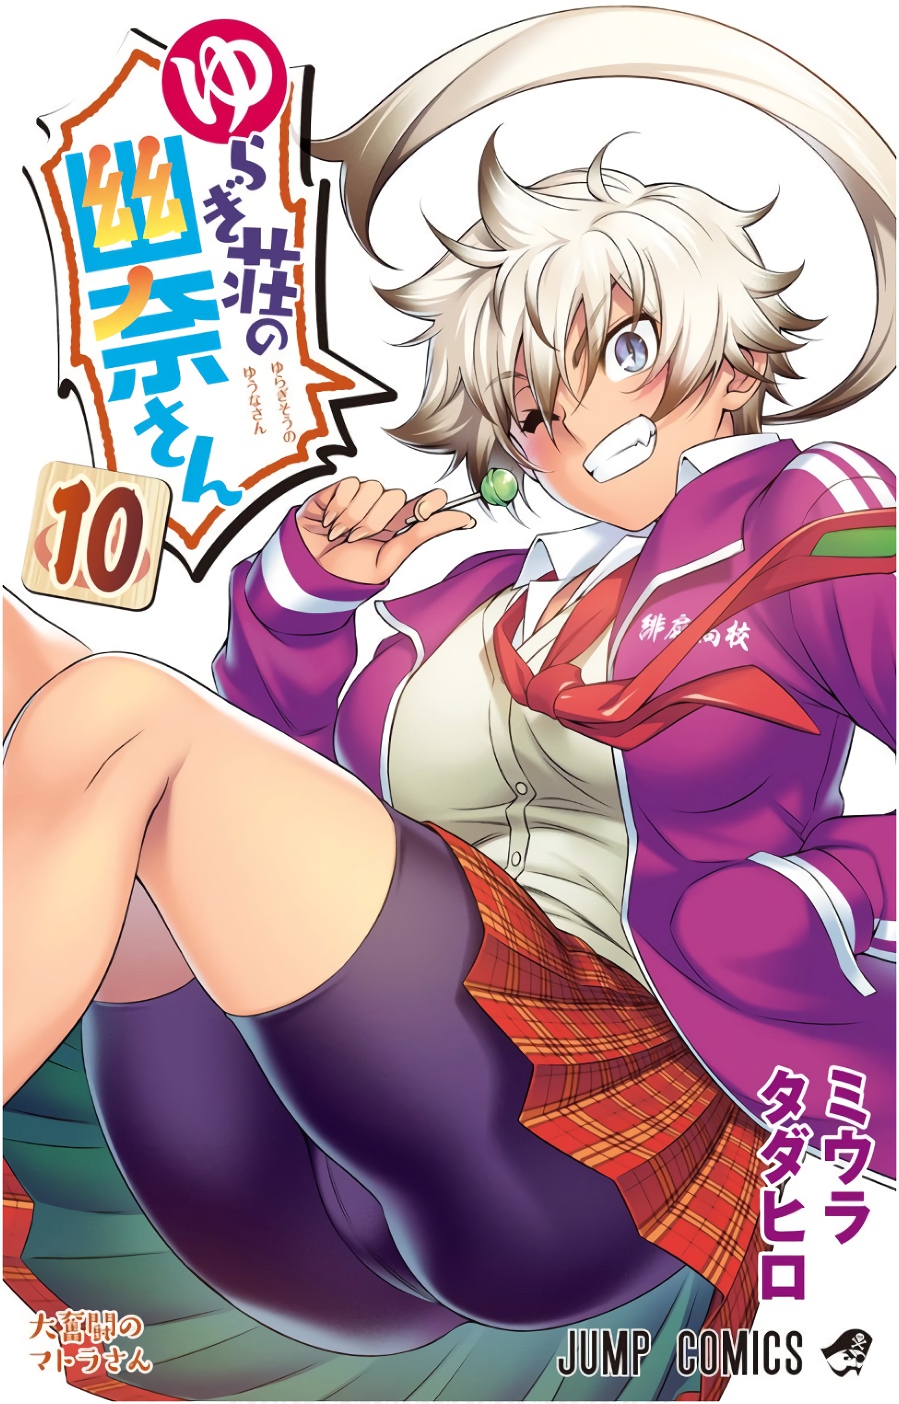 Read Yuragi-Sou no Yuuna-San Manga English [New Chapters] Online Free -  MangaClash